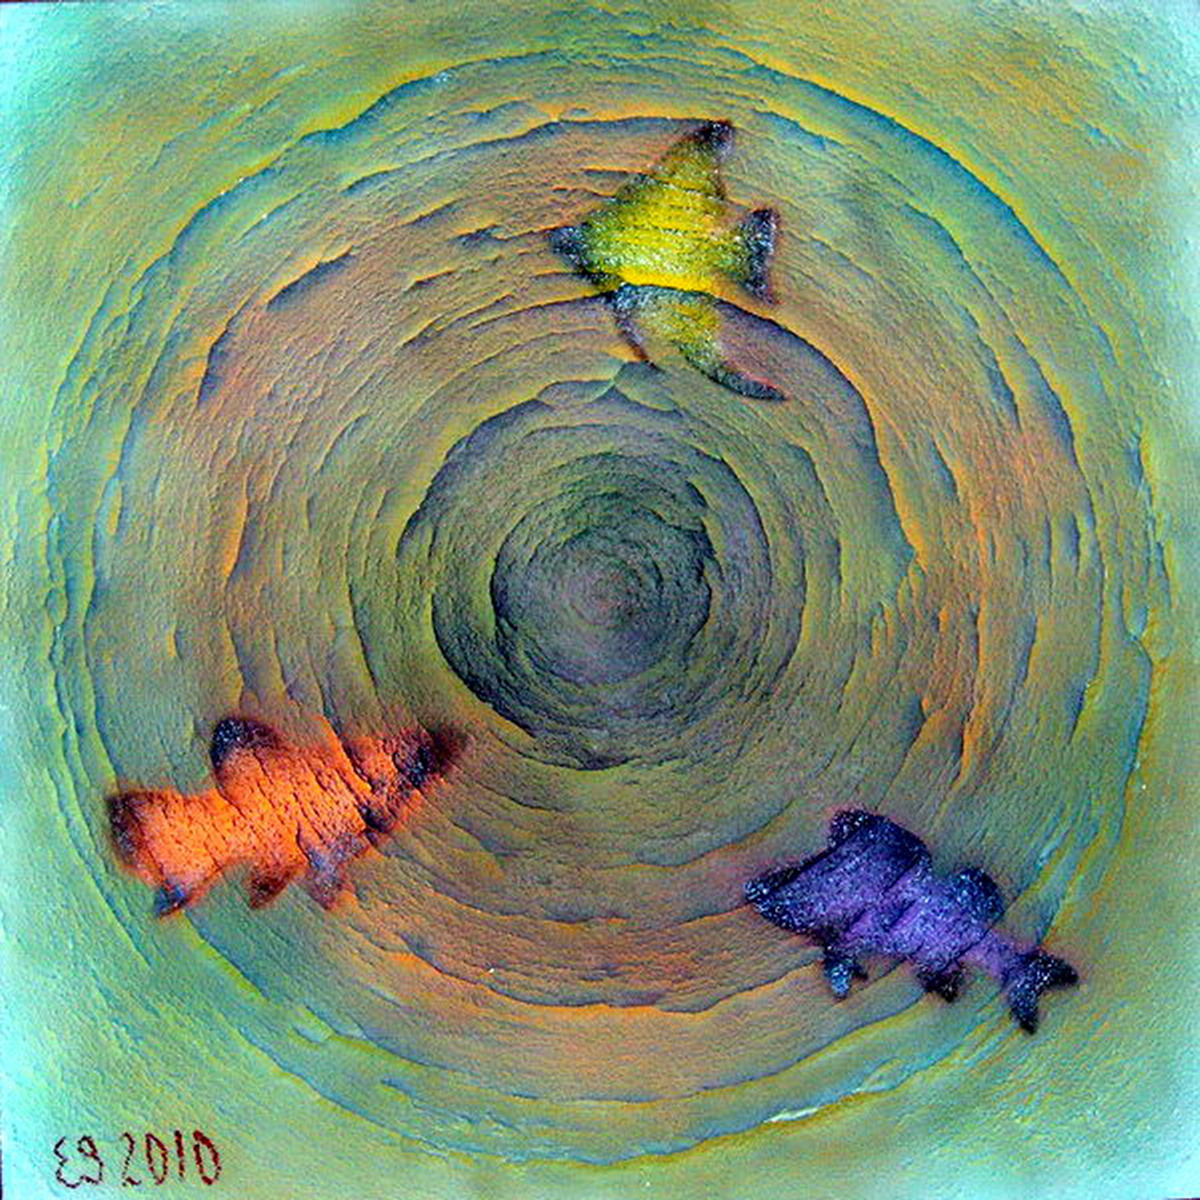 Fishes / Рыбы  / 2010  /  Acril on canvas / 100х100см